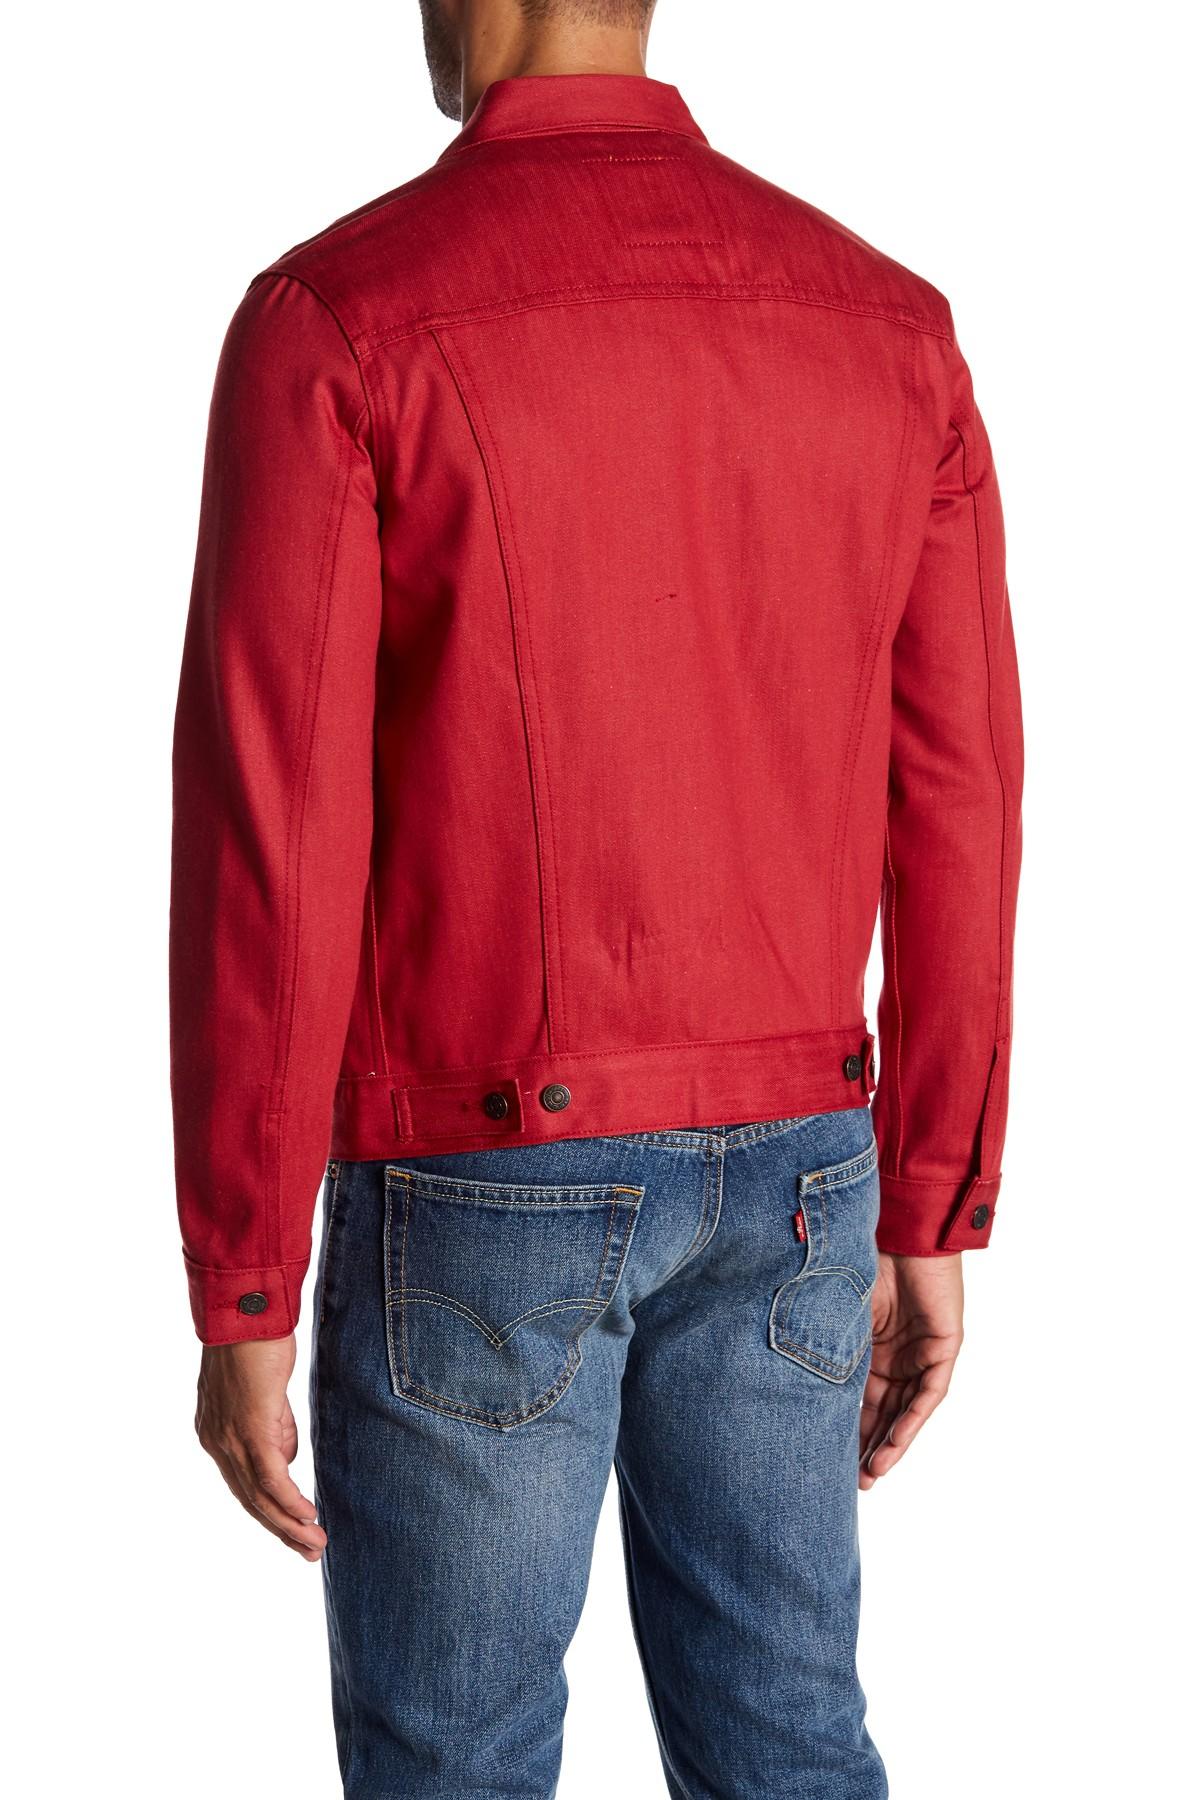 Levi's The Trucker Denim Jacket in Red for Men | Lyst